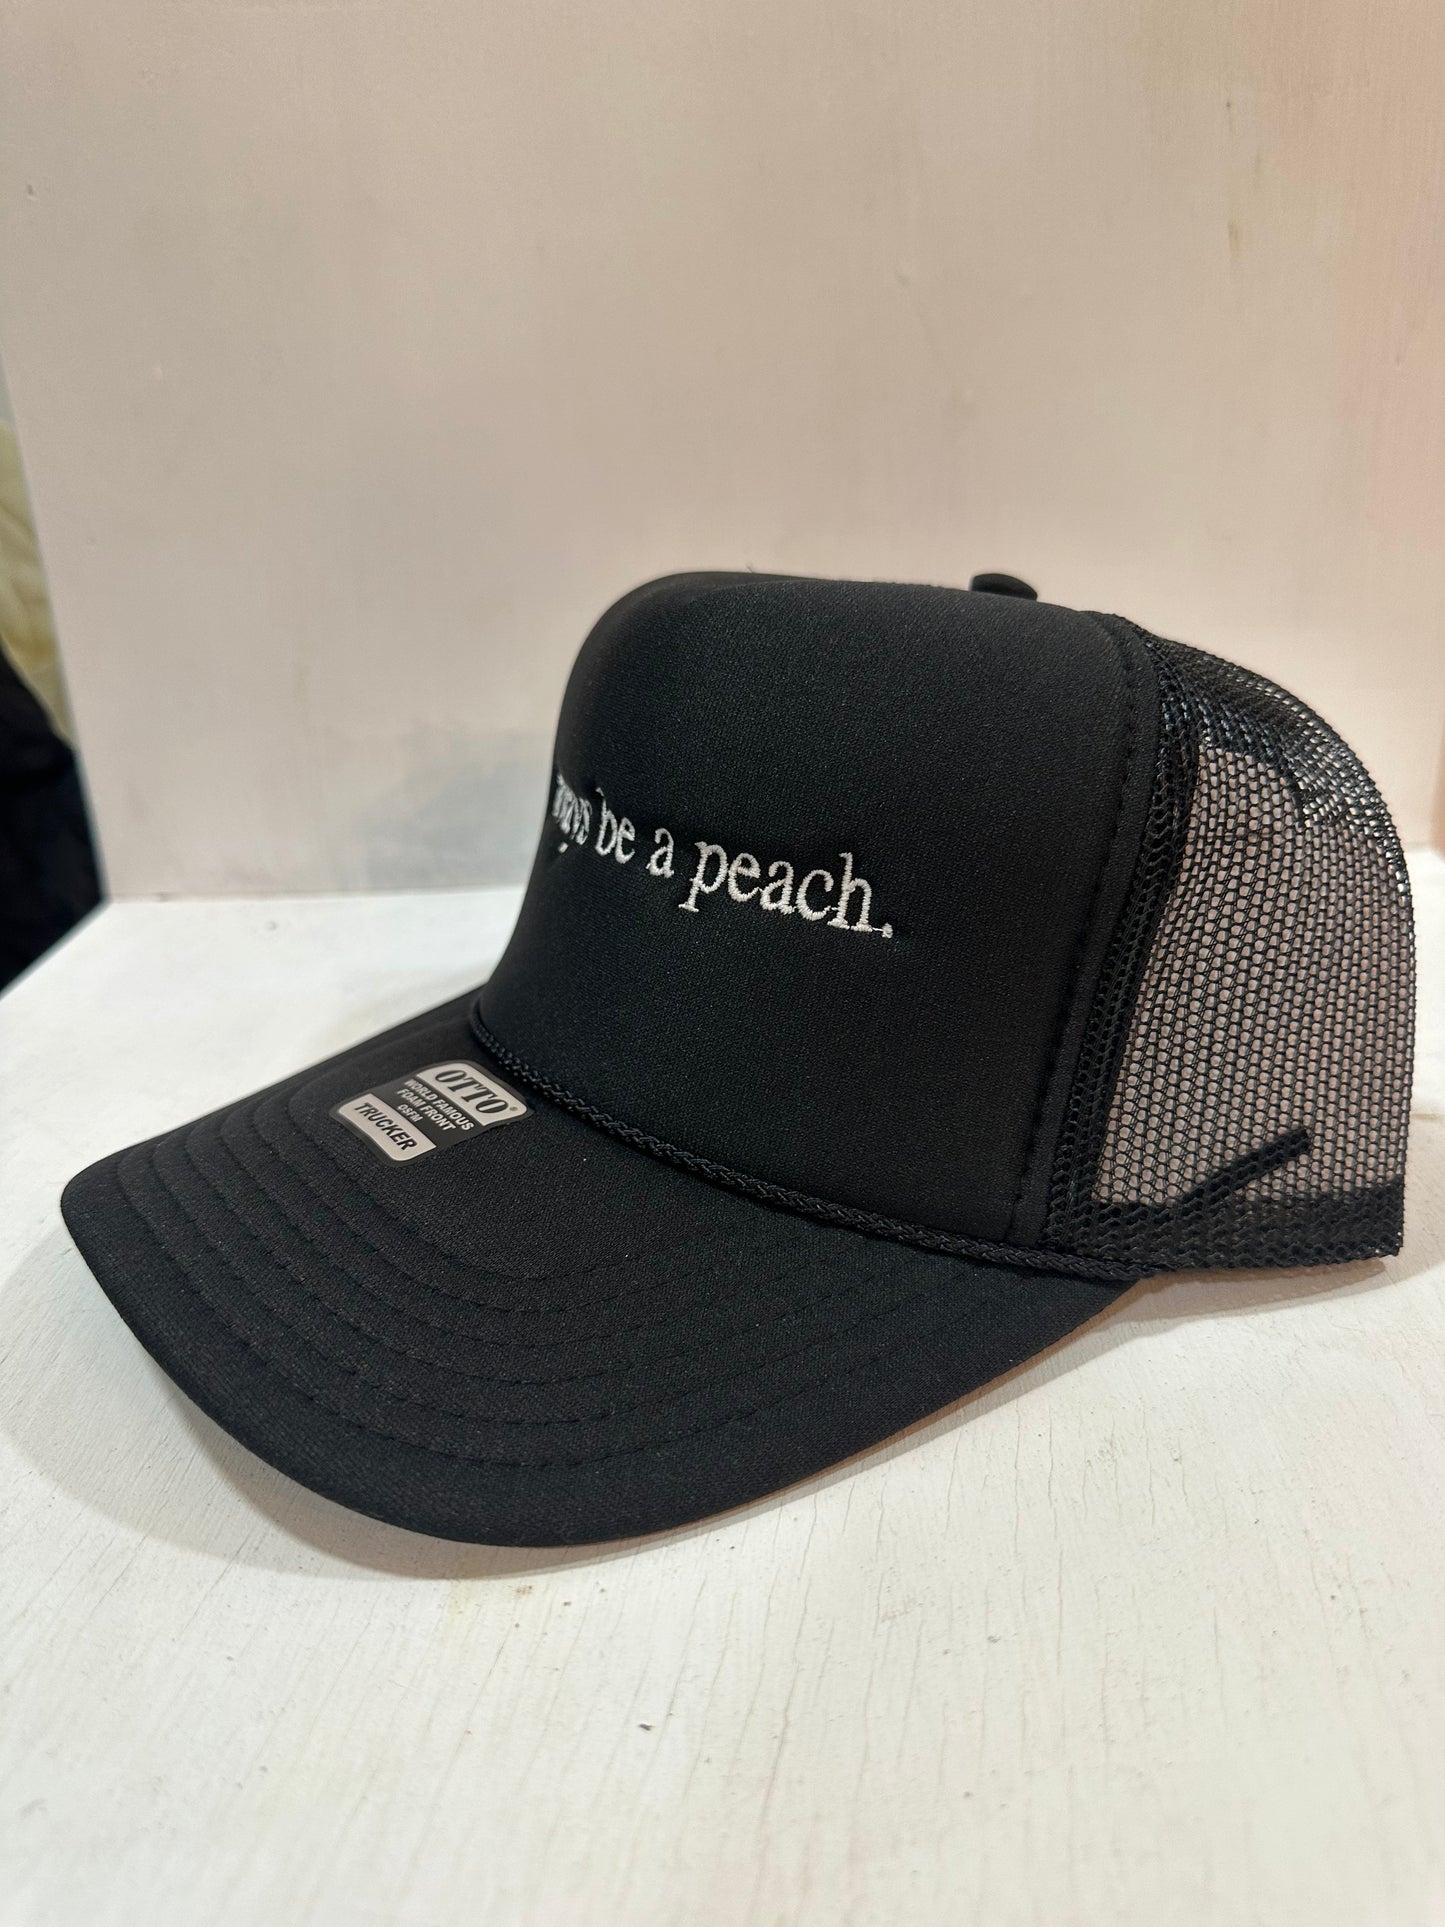 Always be a peach Trucker Hat